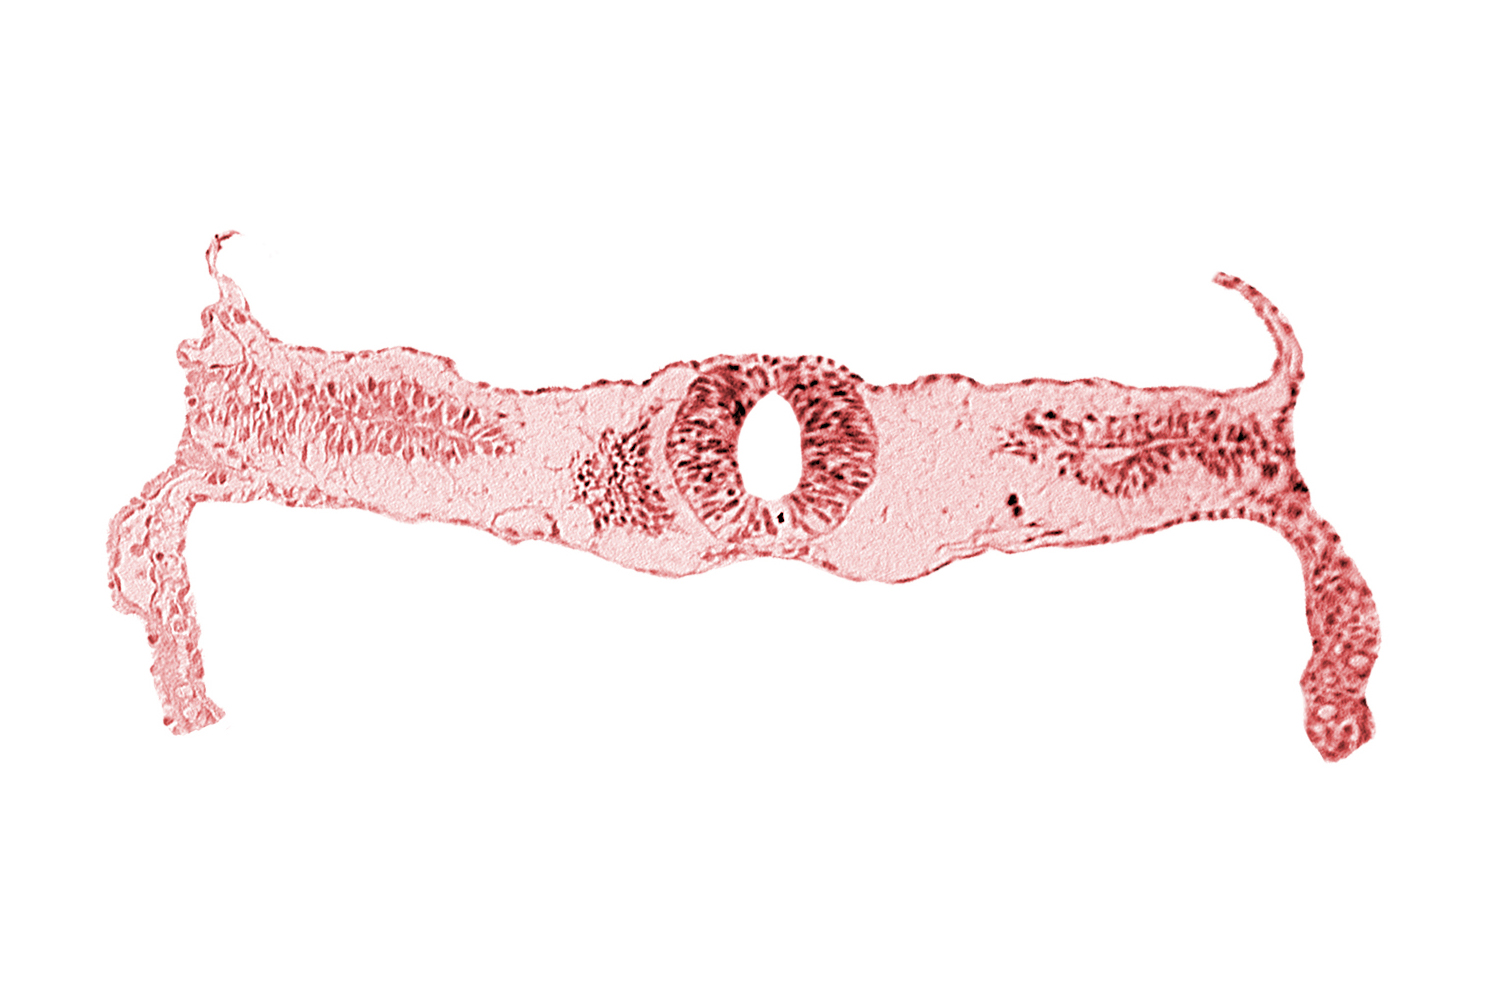 extra-embryonic coelom, midgut, neural tube [rhombencephalon (Rh. D)], somite 3-4 intersegmental region